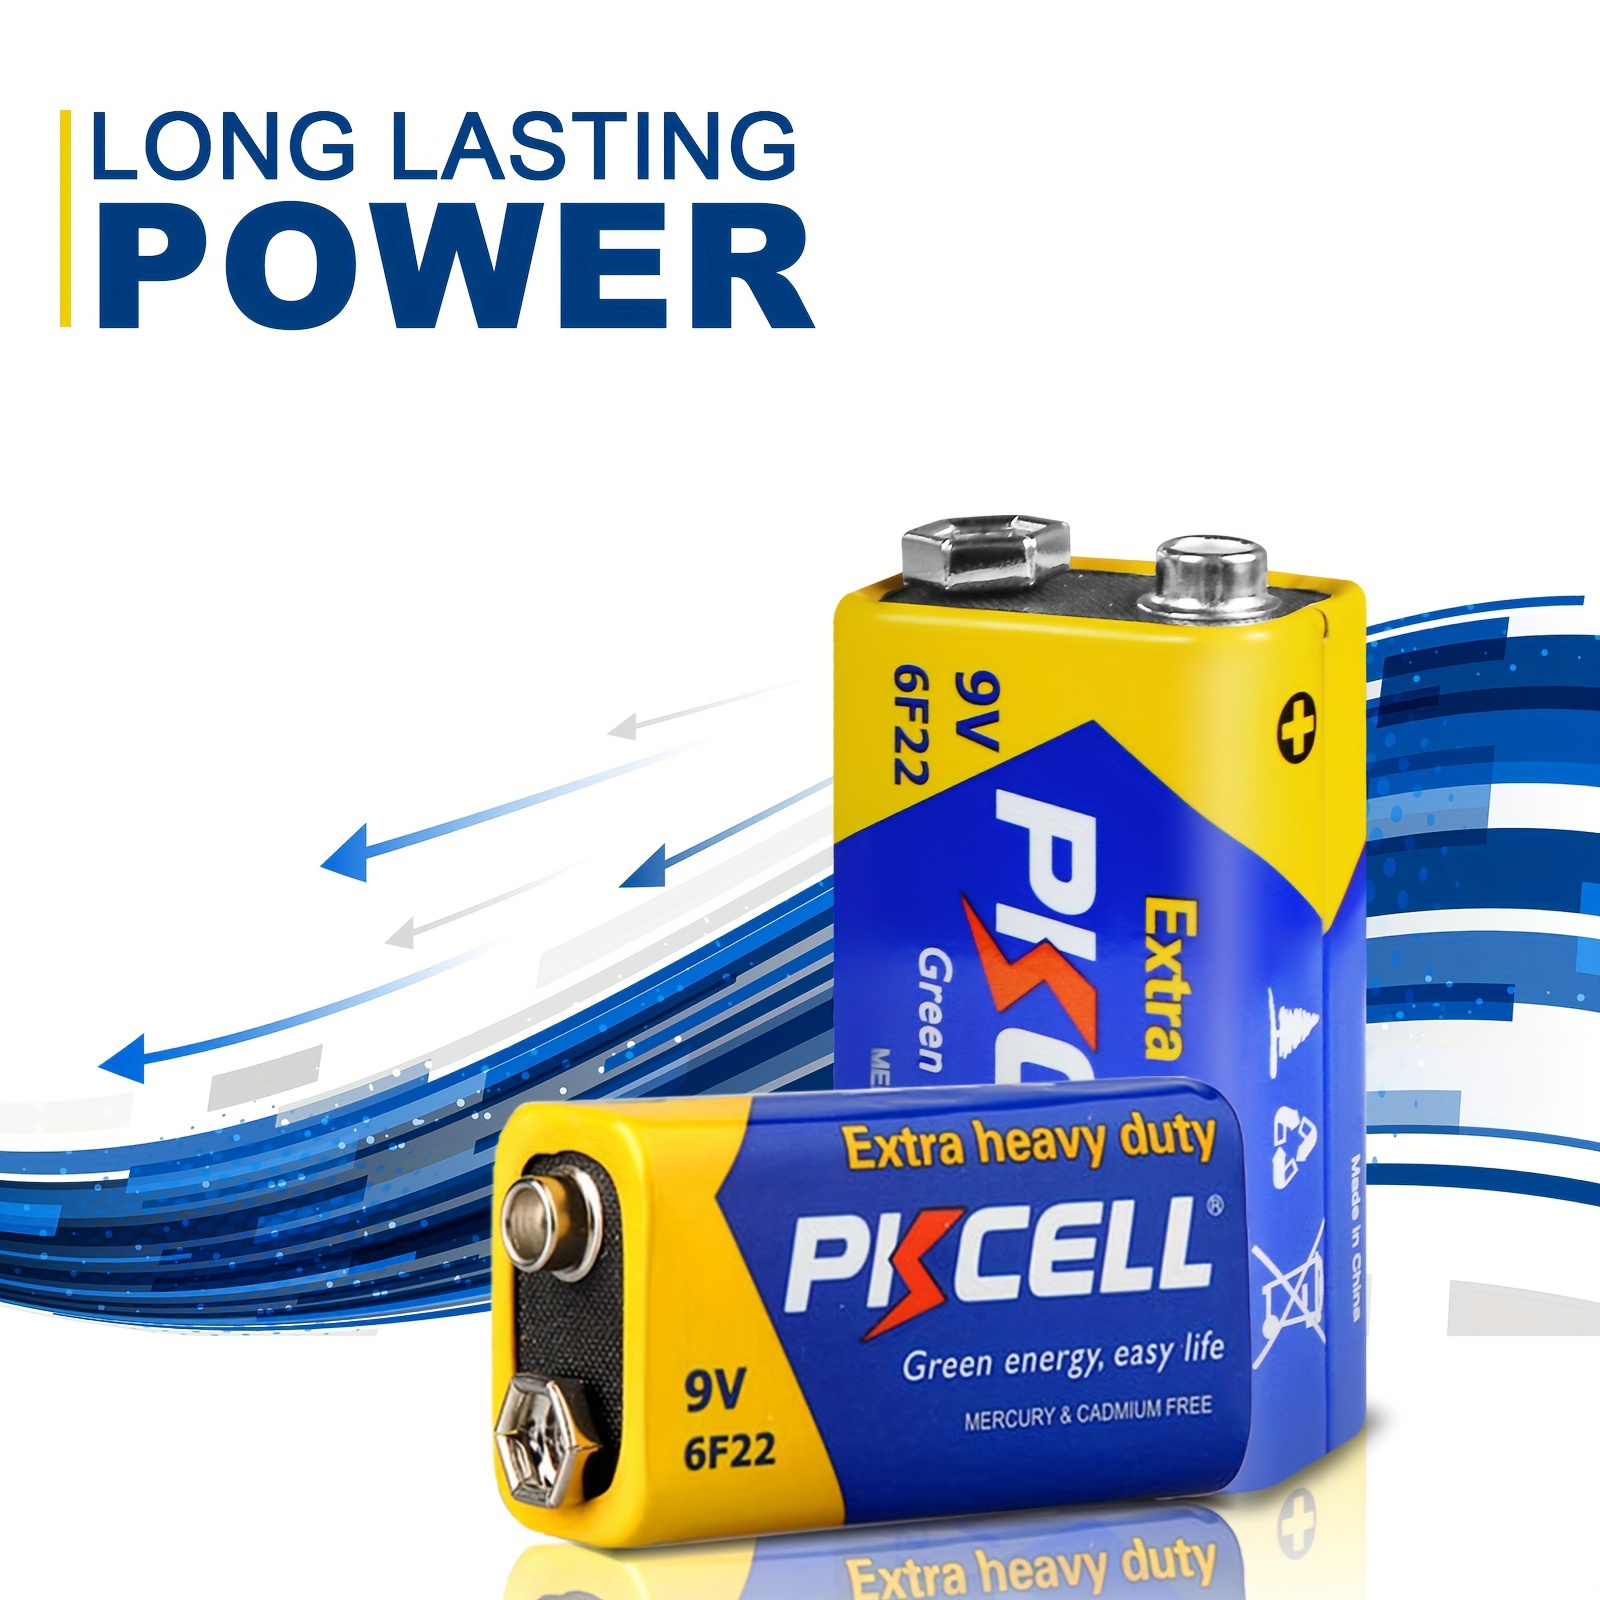 

2pcs Pkcell 9v Batteries, Carbon Zinc 6f22 Battery, Suitable For Smoke Detectors, Ultra Long-lasting Battery Life